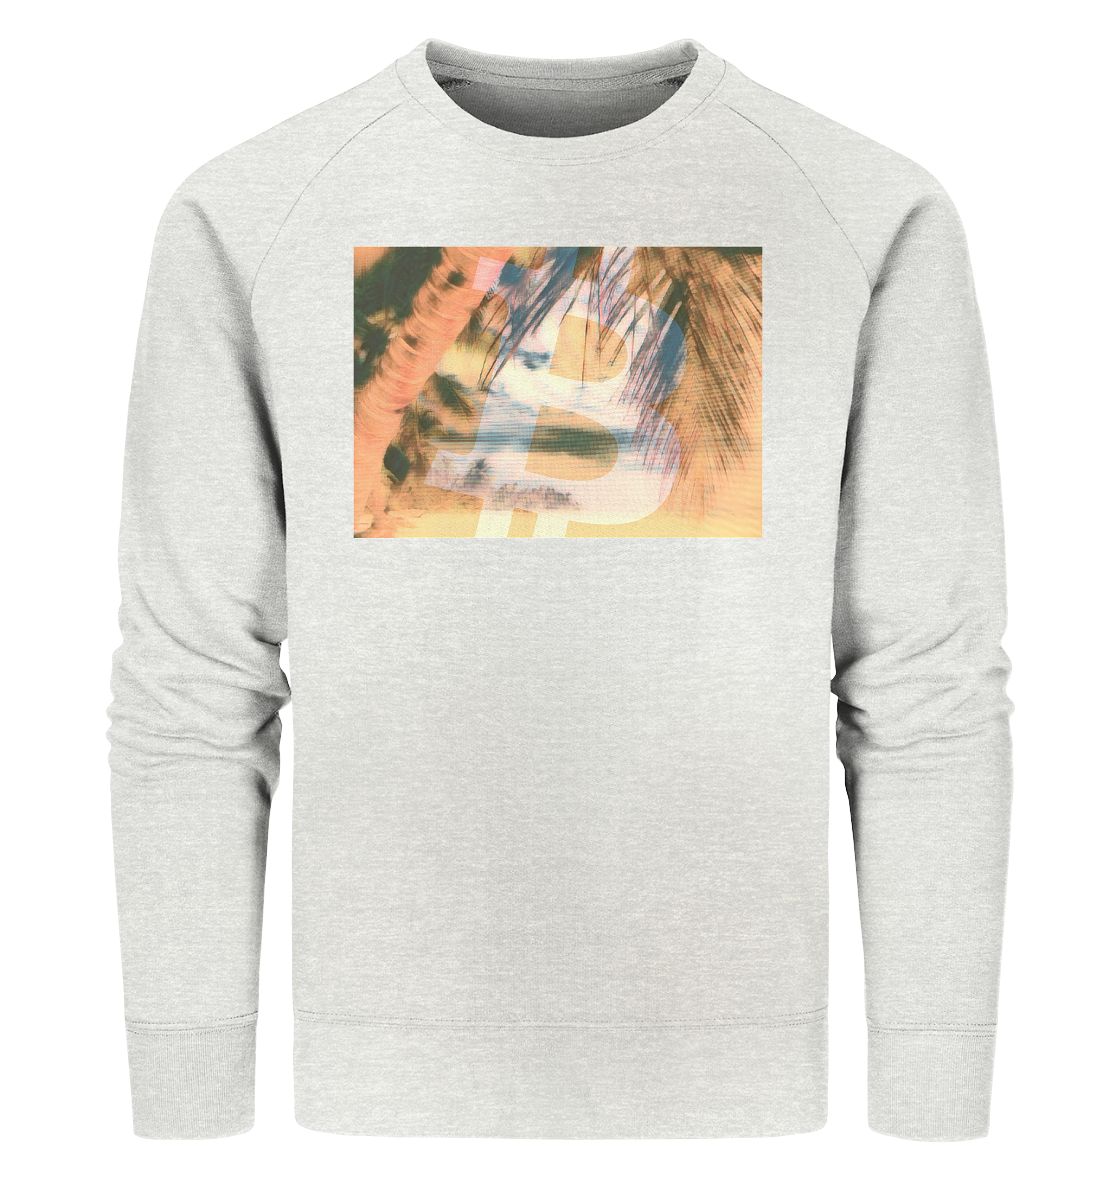 Bitcoin "Beach" - Organic Sweatshirt